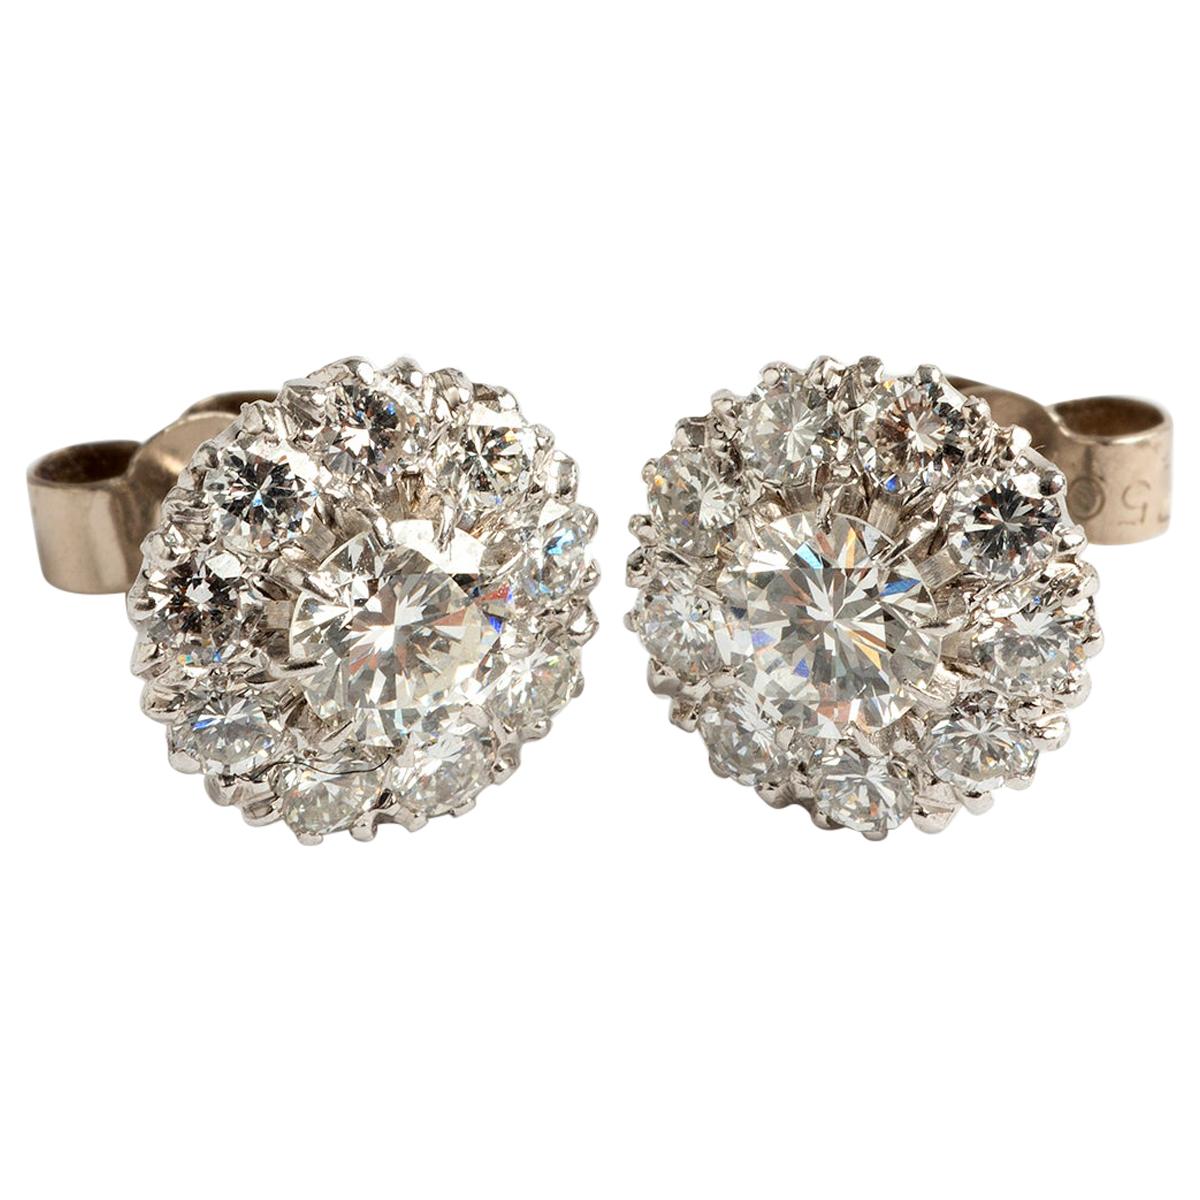 Diamond Cluster Earrings, 18 Carat White Gold,  Est 1.97 Ct Brill Cut Diamonds. For Sale